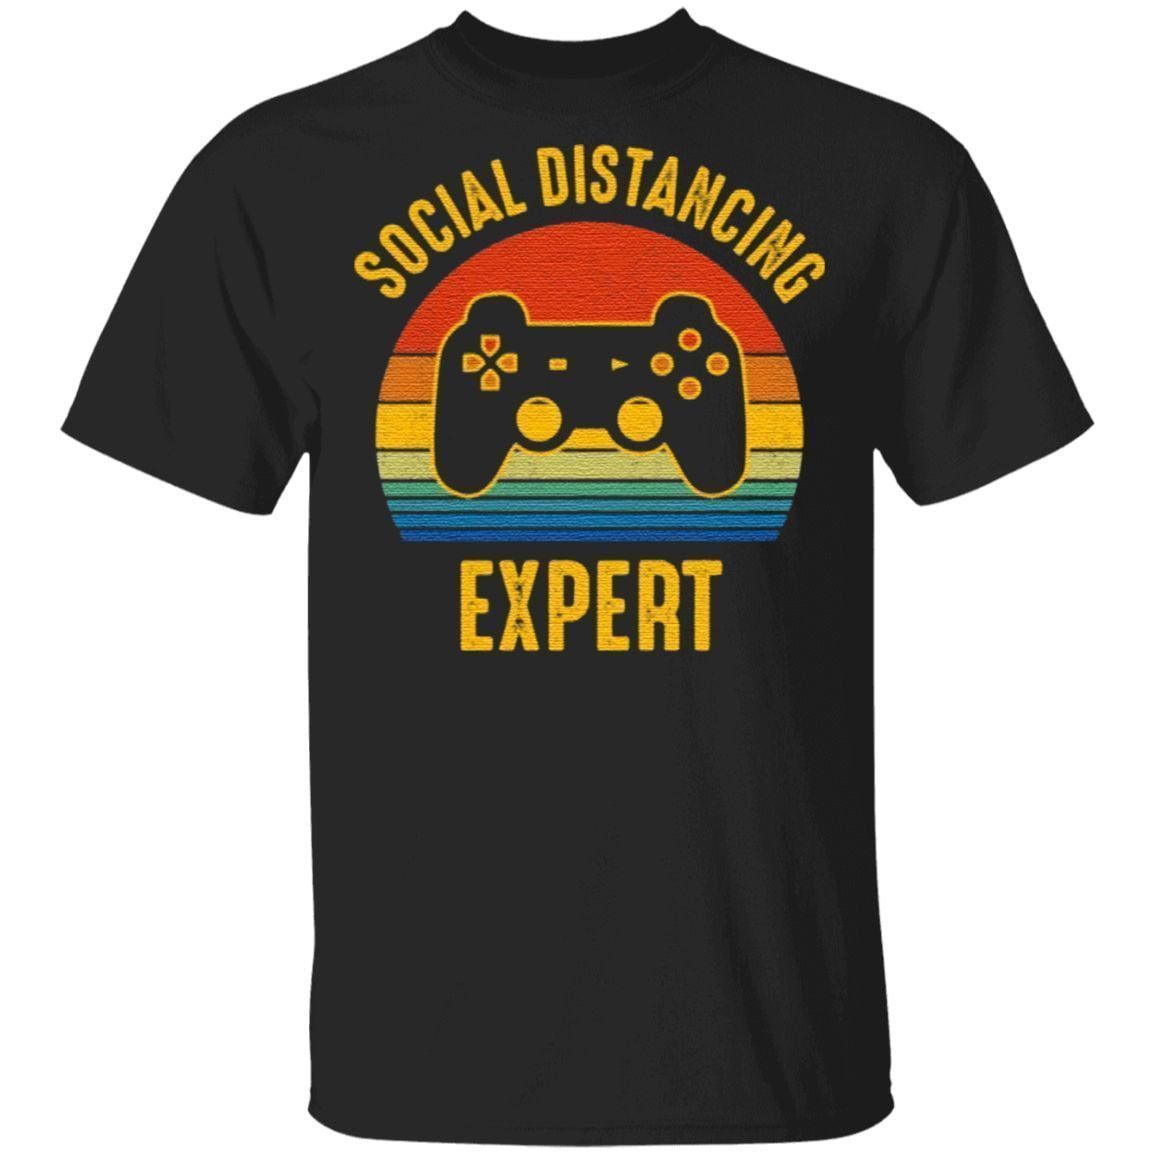 Social Distancing Expert Video Game T-Shirt